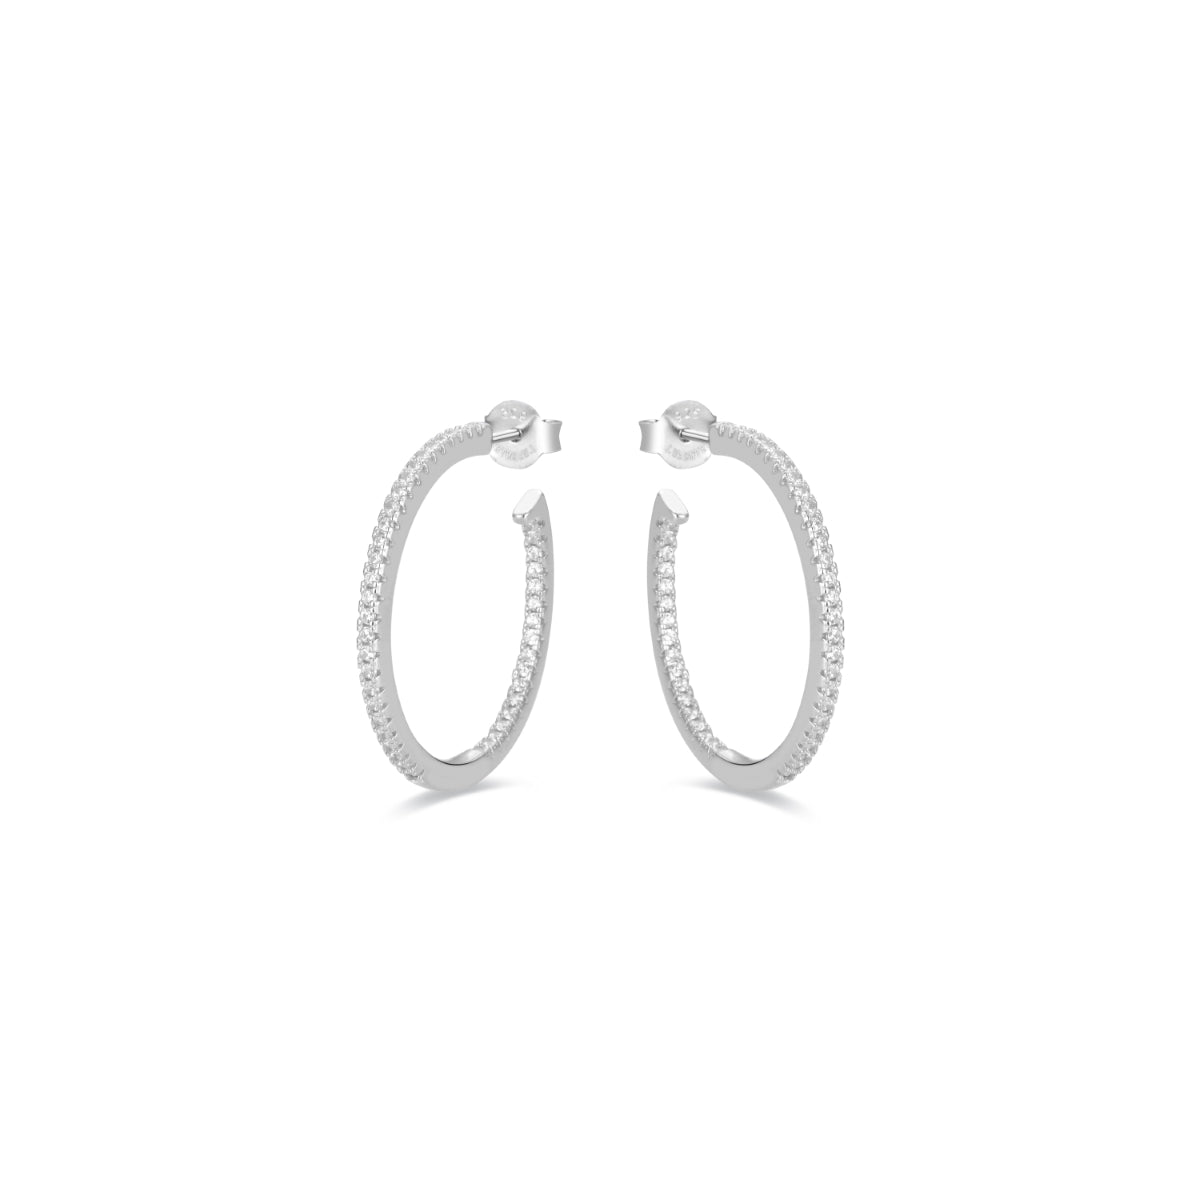 Xoma 925 Sterling Silver Earrings